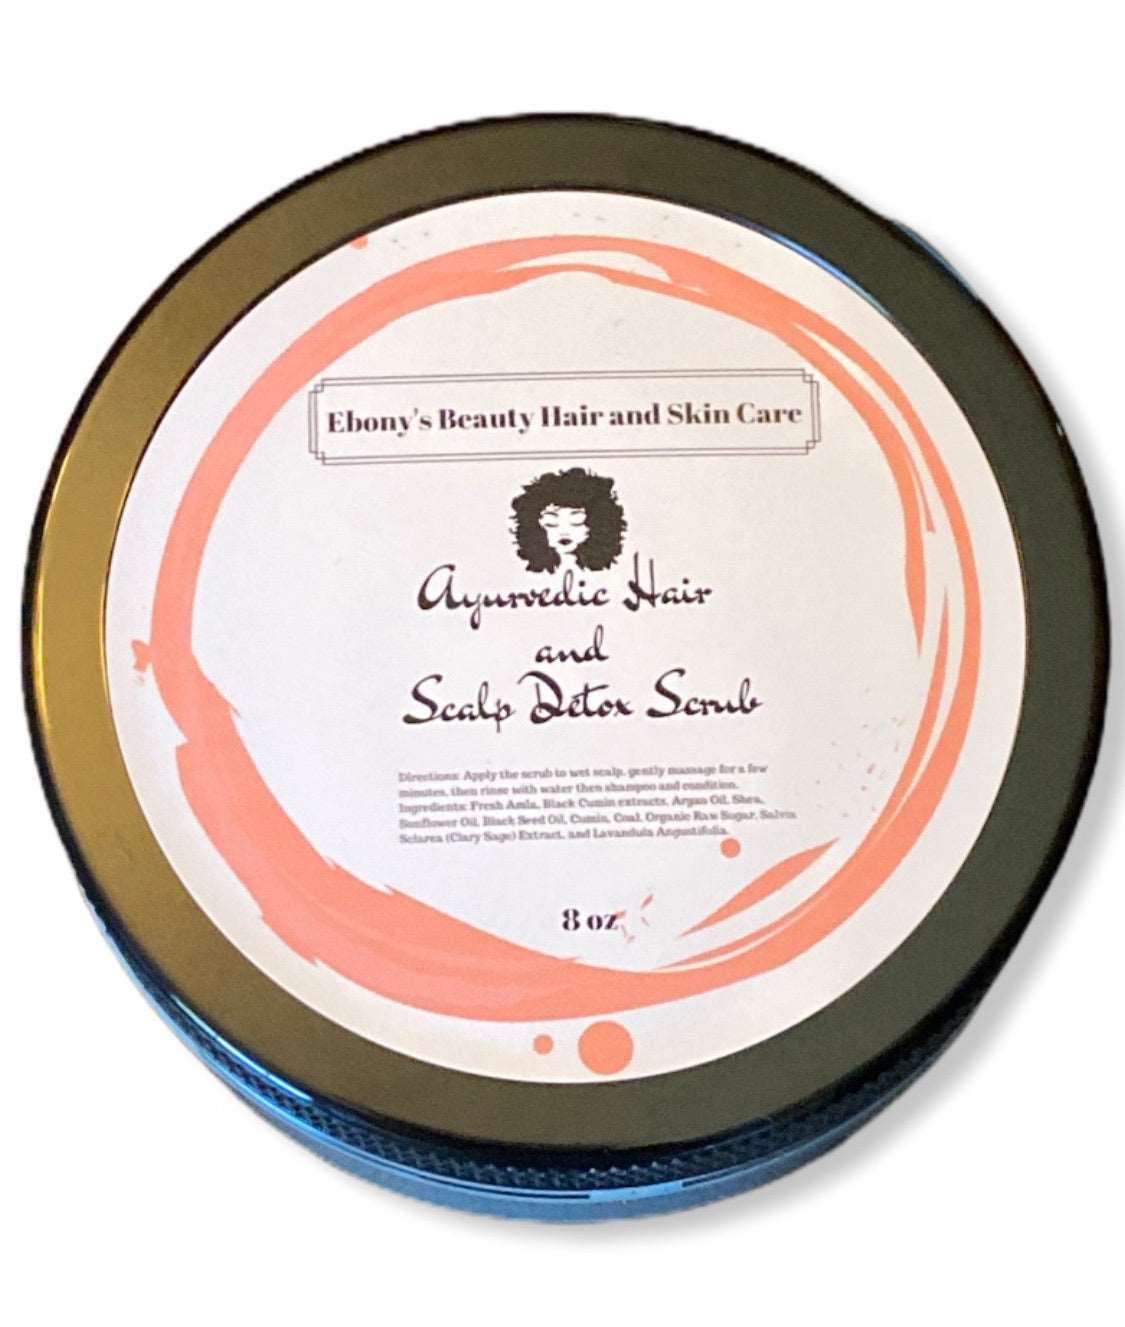 Ayurvedic Herbal Hair and Scalp Detox Scrub - Ebony's Beauty Hair and Skin Care LLC